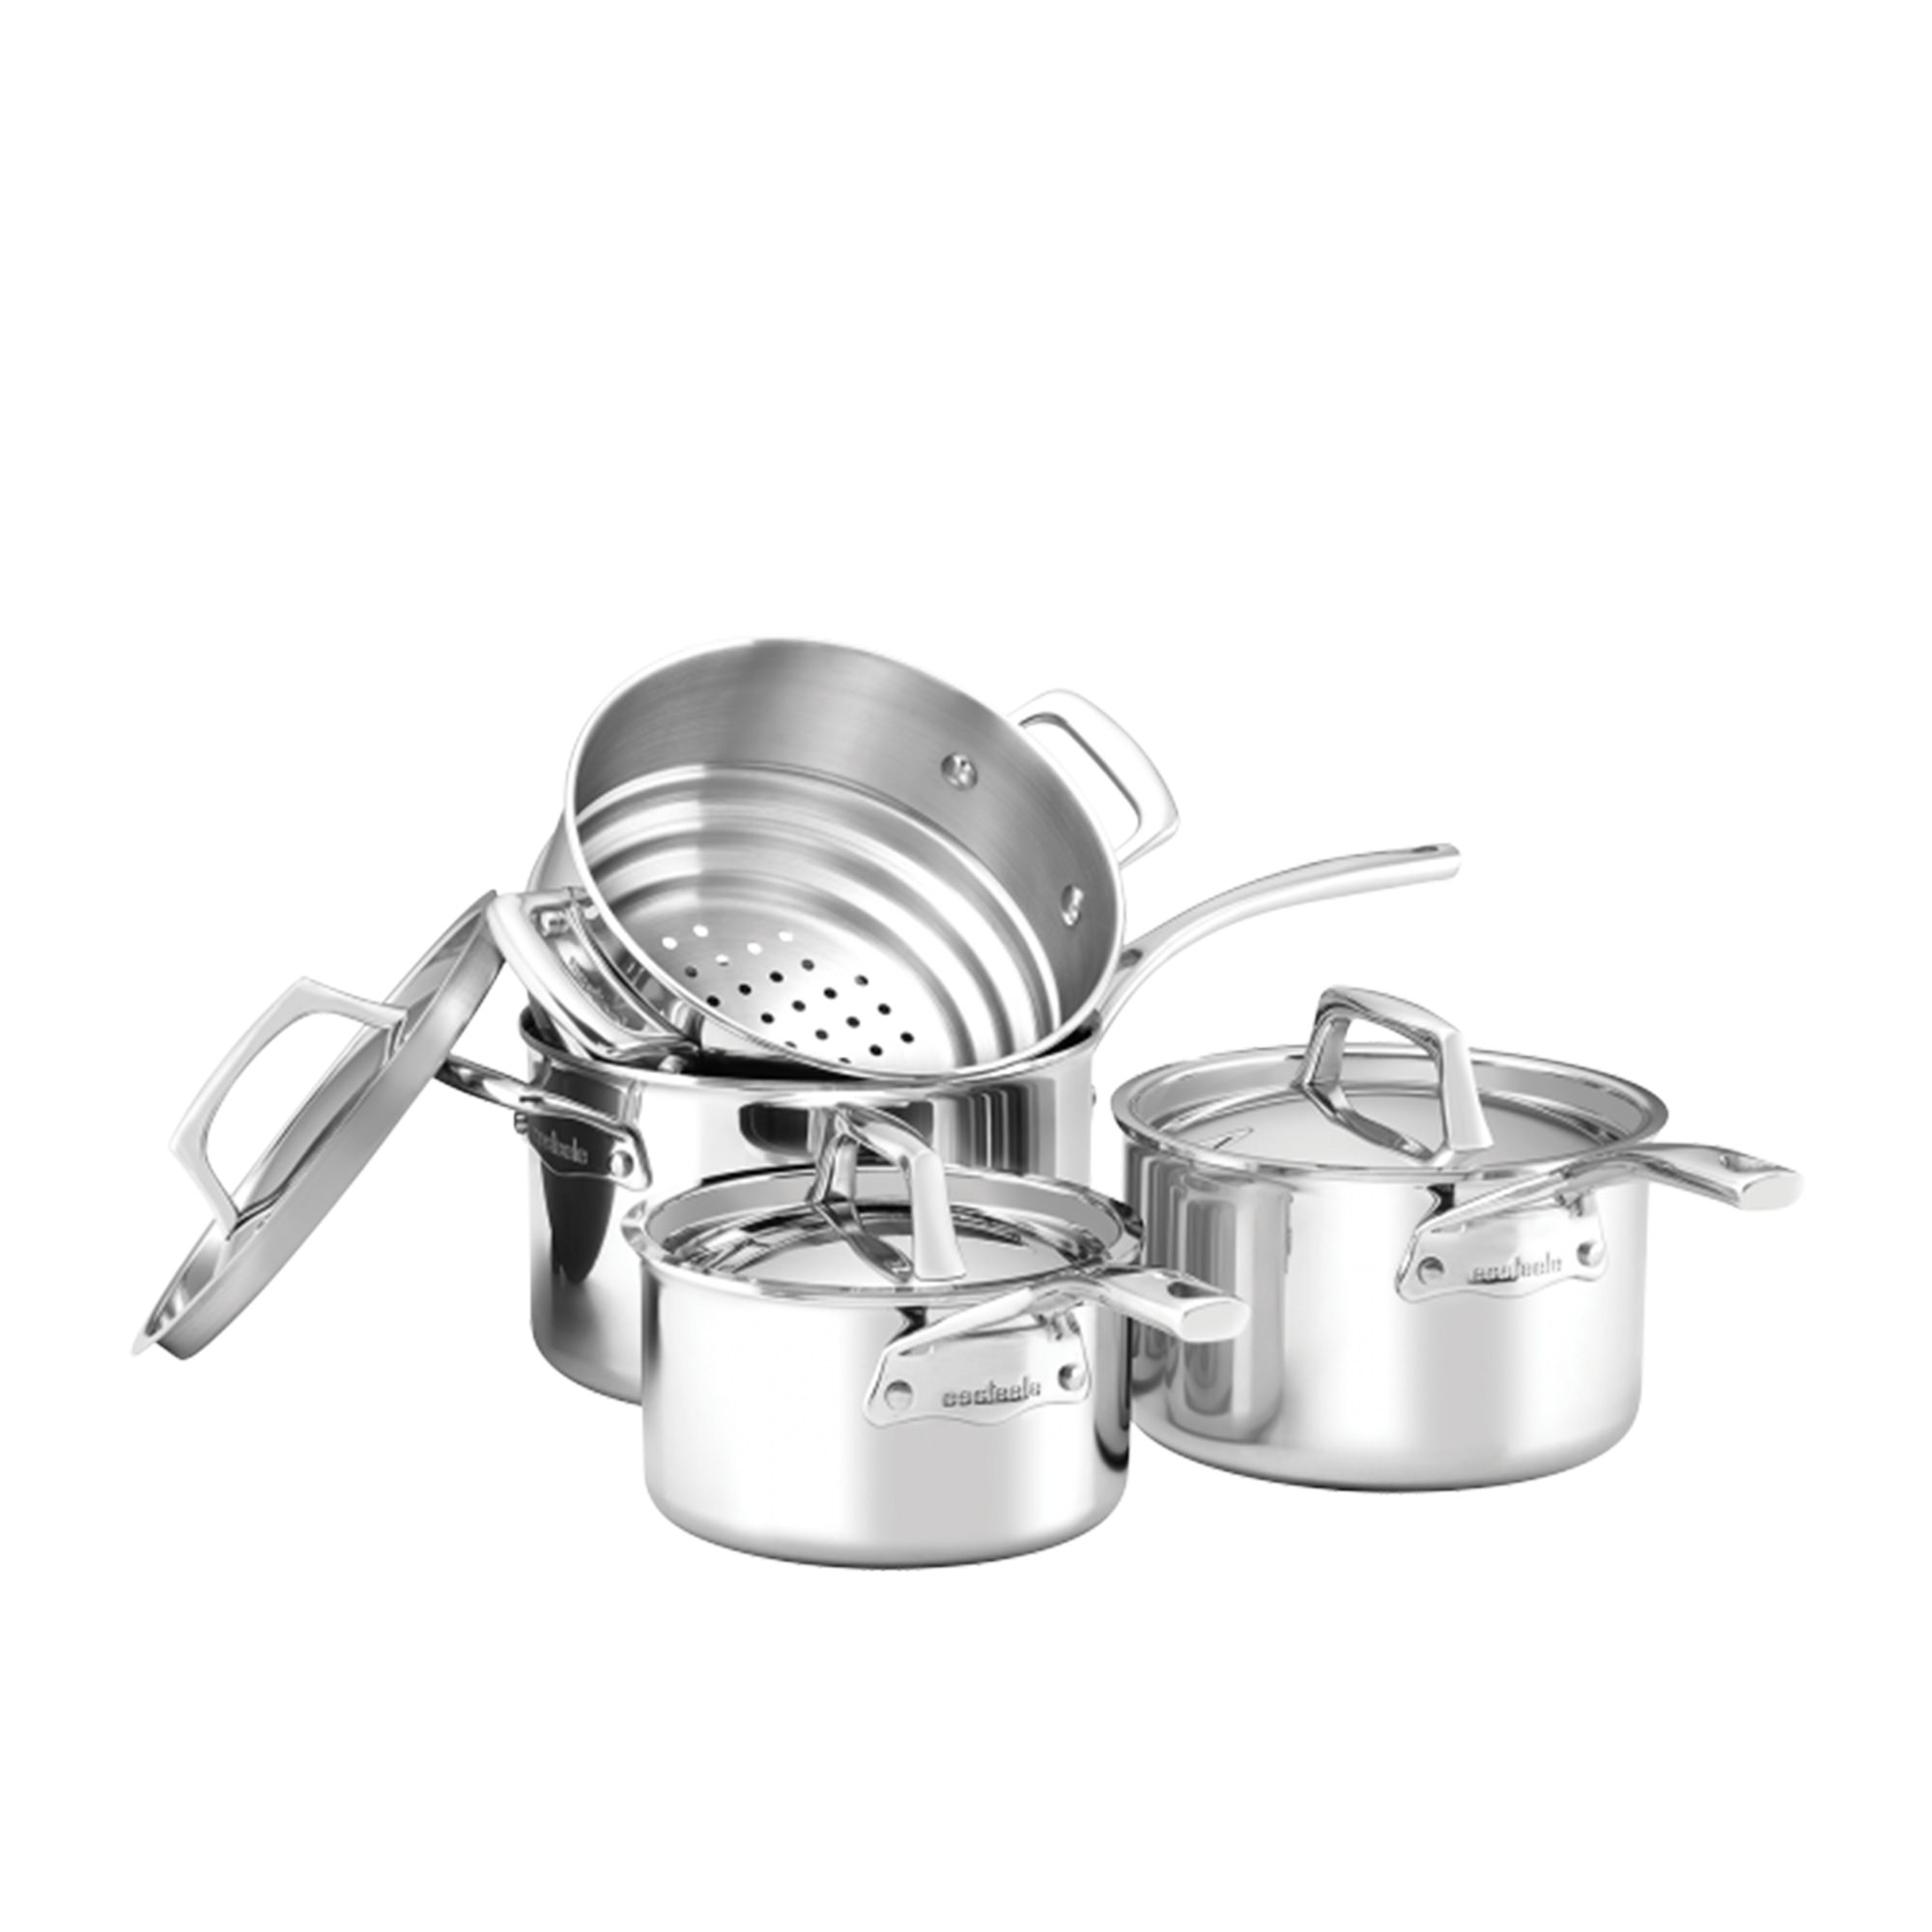 Essteele Per Sempre 4pc Stainless Steel Cookware Set Image 1